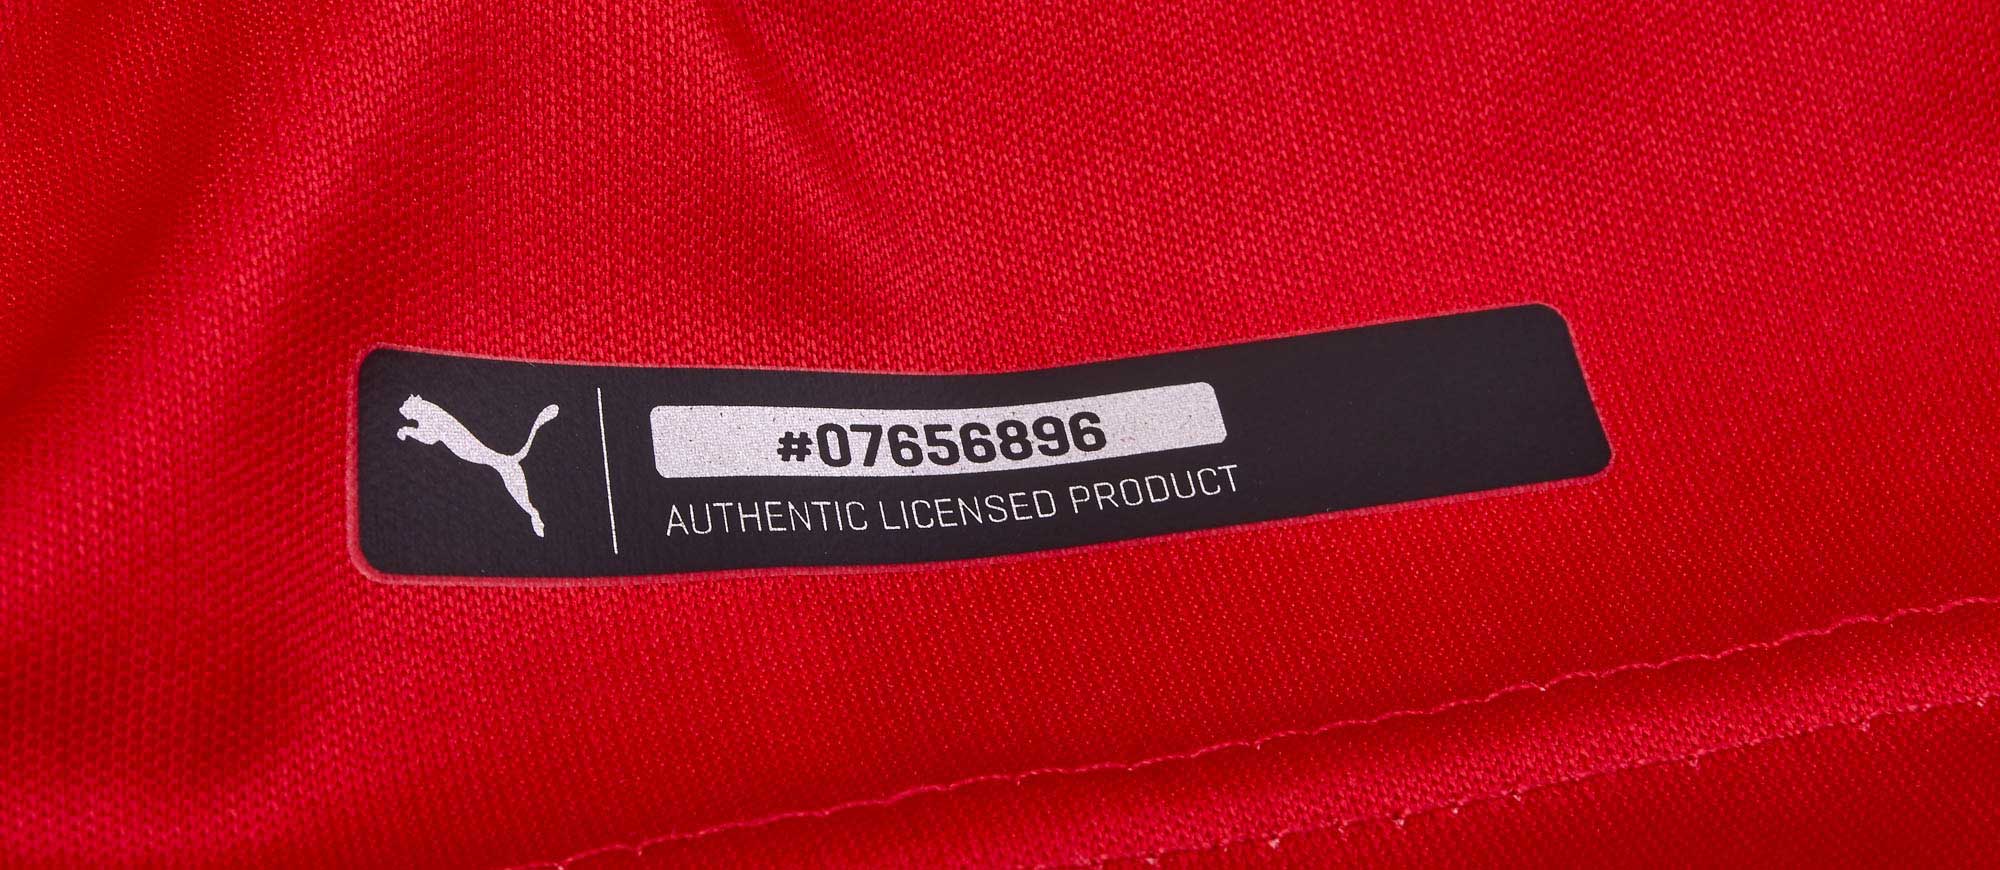 puma authentic licensed product number